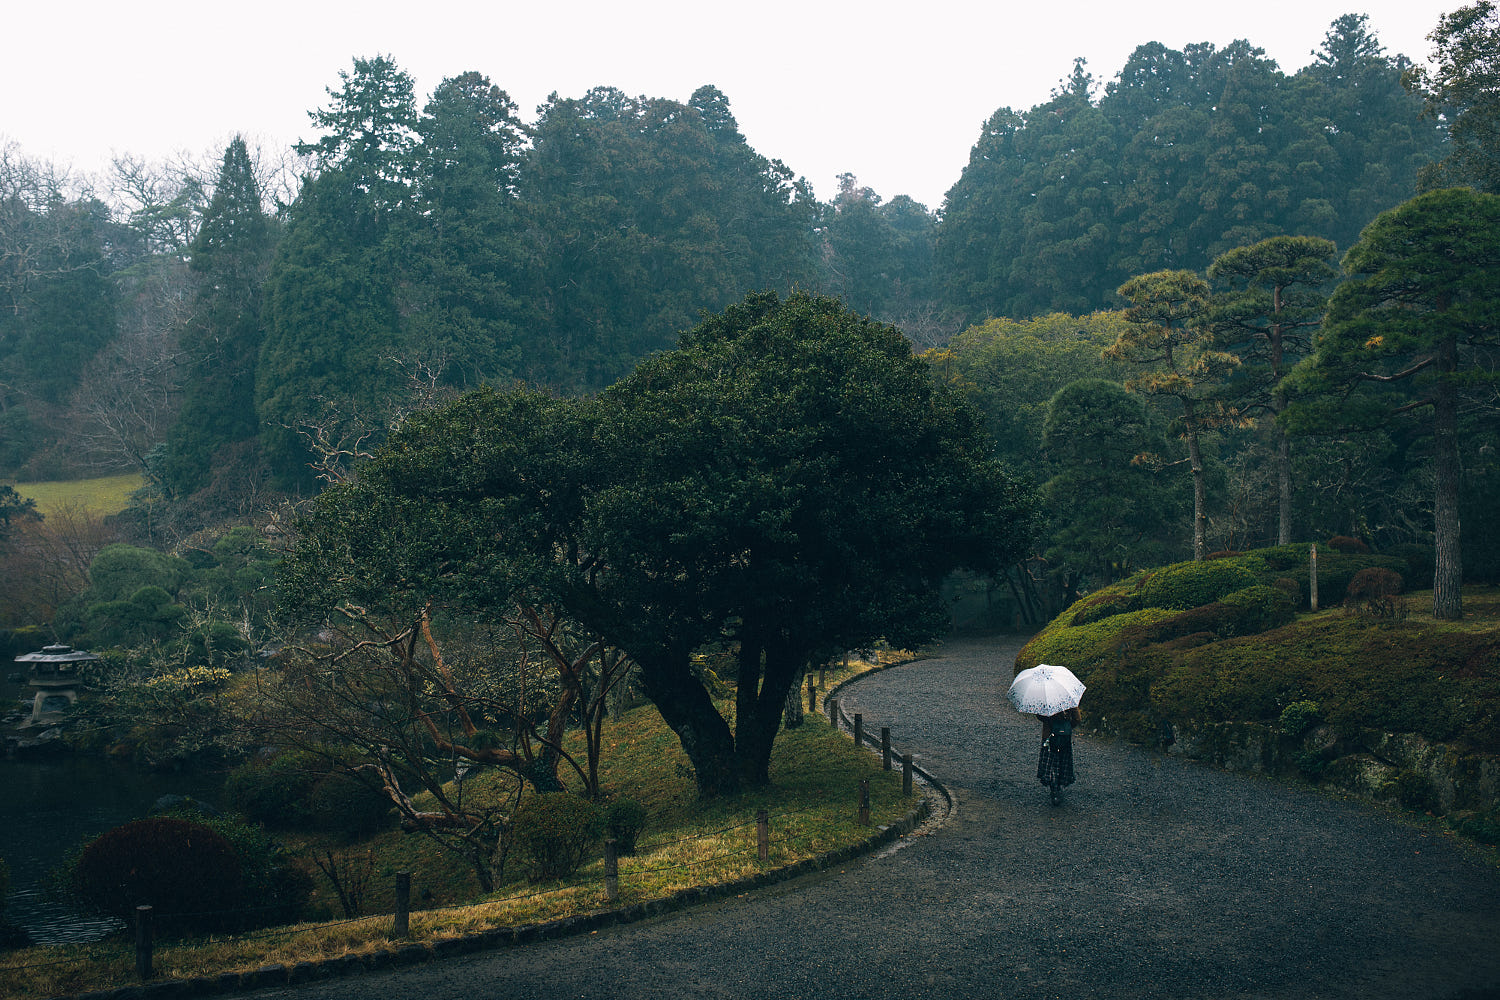 Film Grain Green Japan Forest Trees Landscape Umbrella People Alone 1500x1000